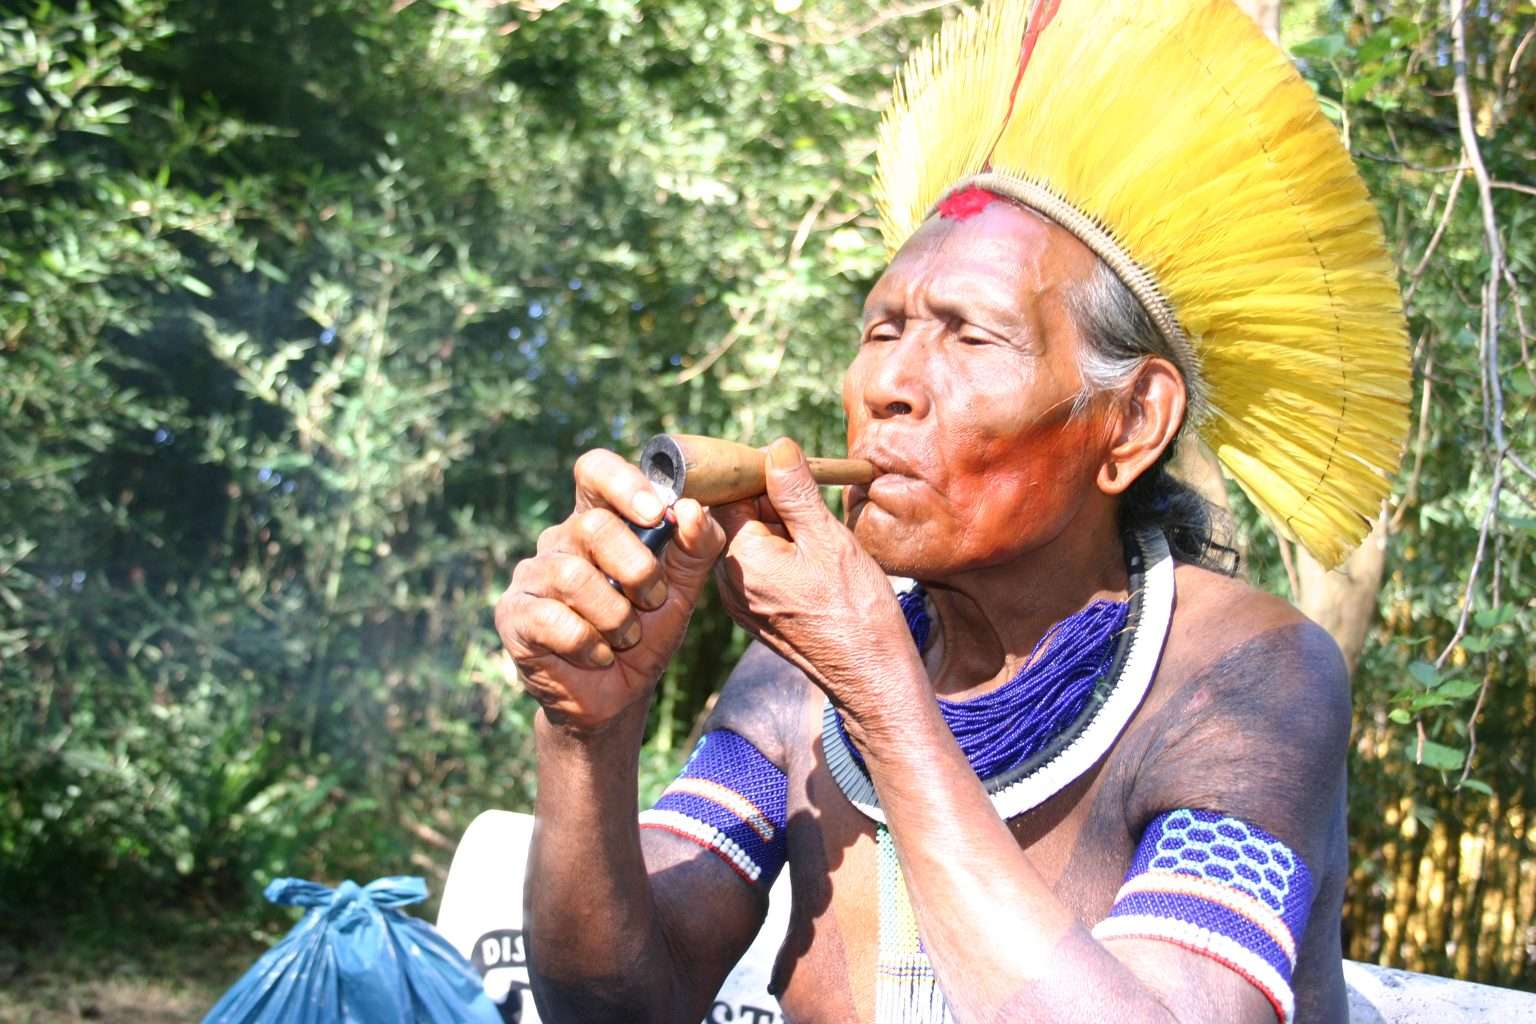 Povos indígenas: velhice e os desafios da saúde no Brasil